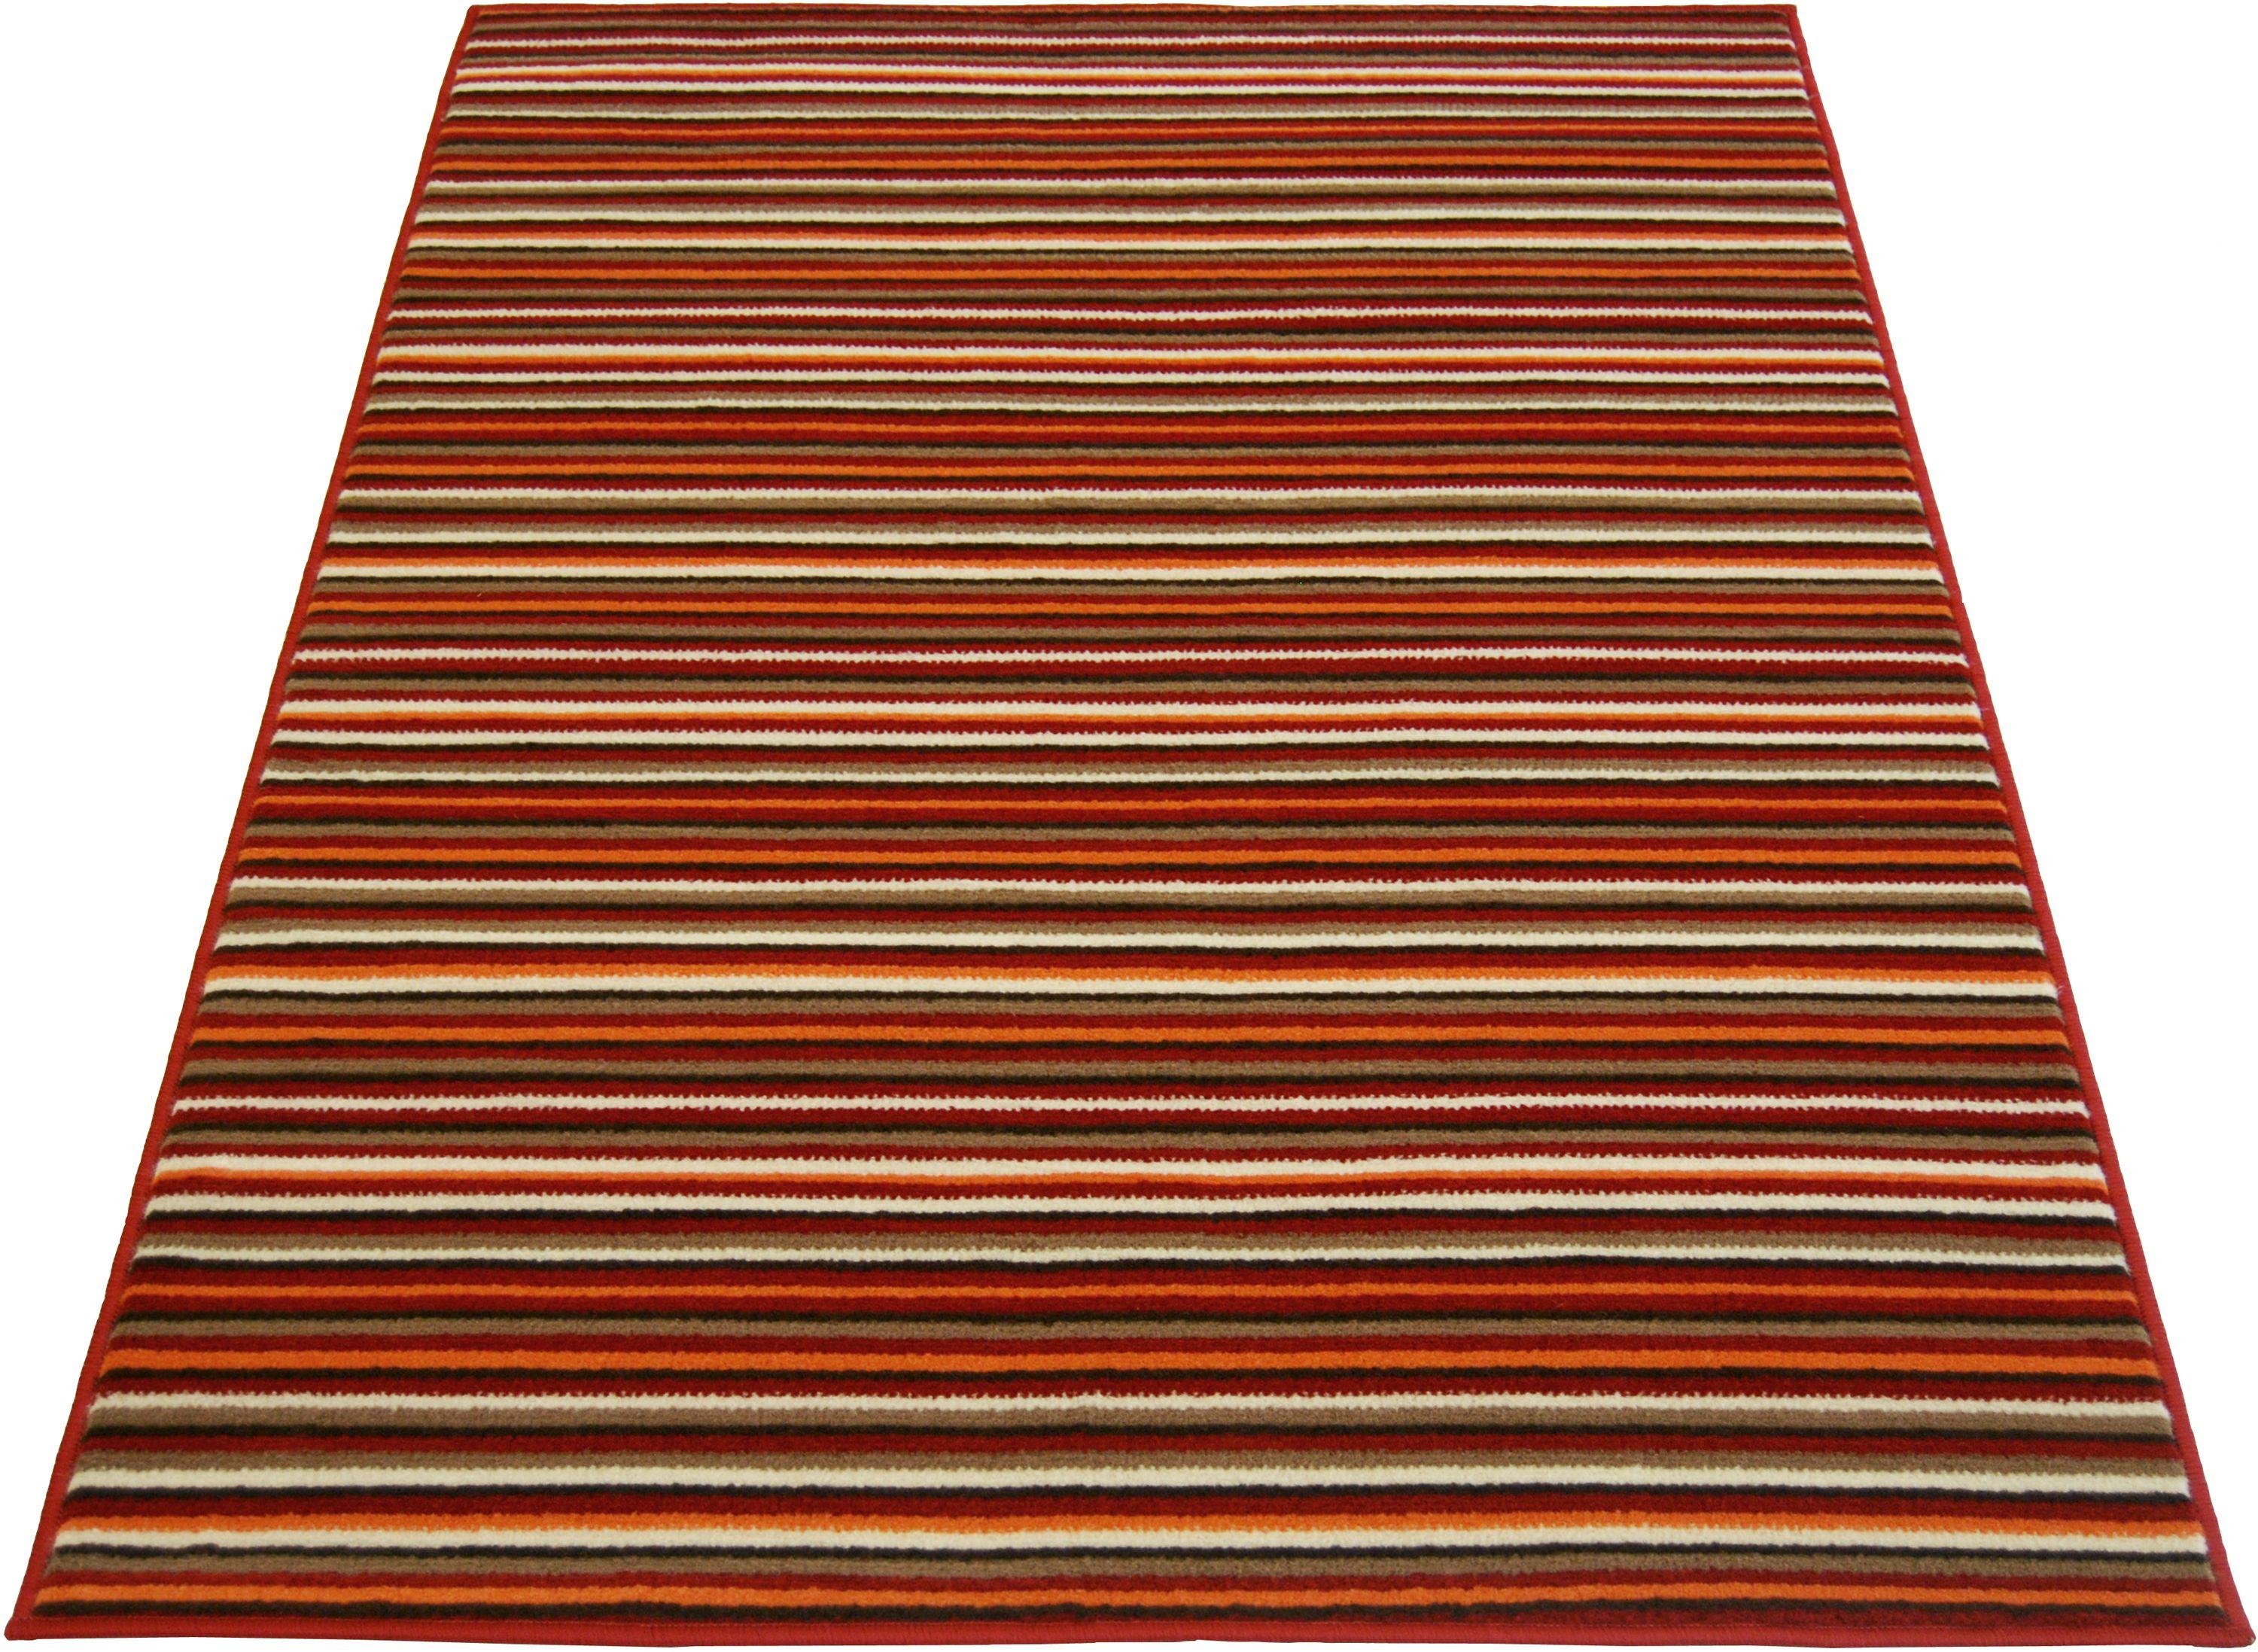 Maestro Fine Stripe Rug - 160x230cm - Red